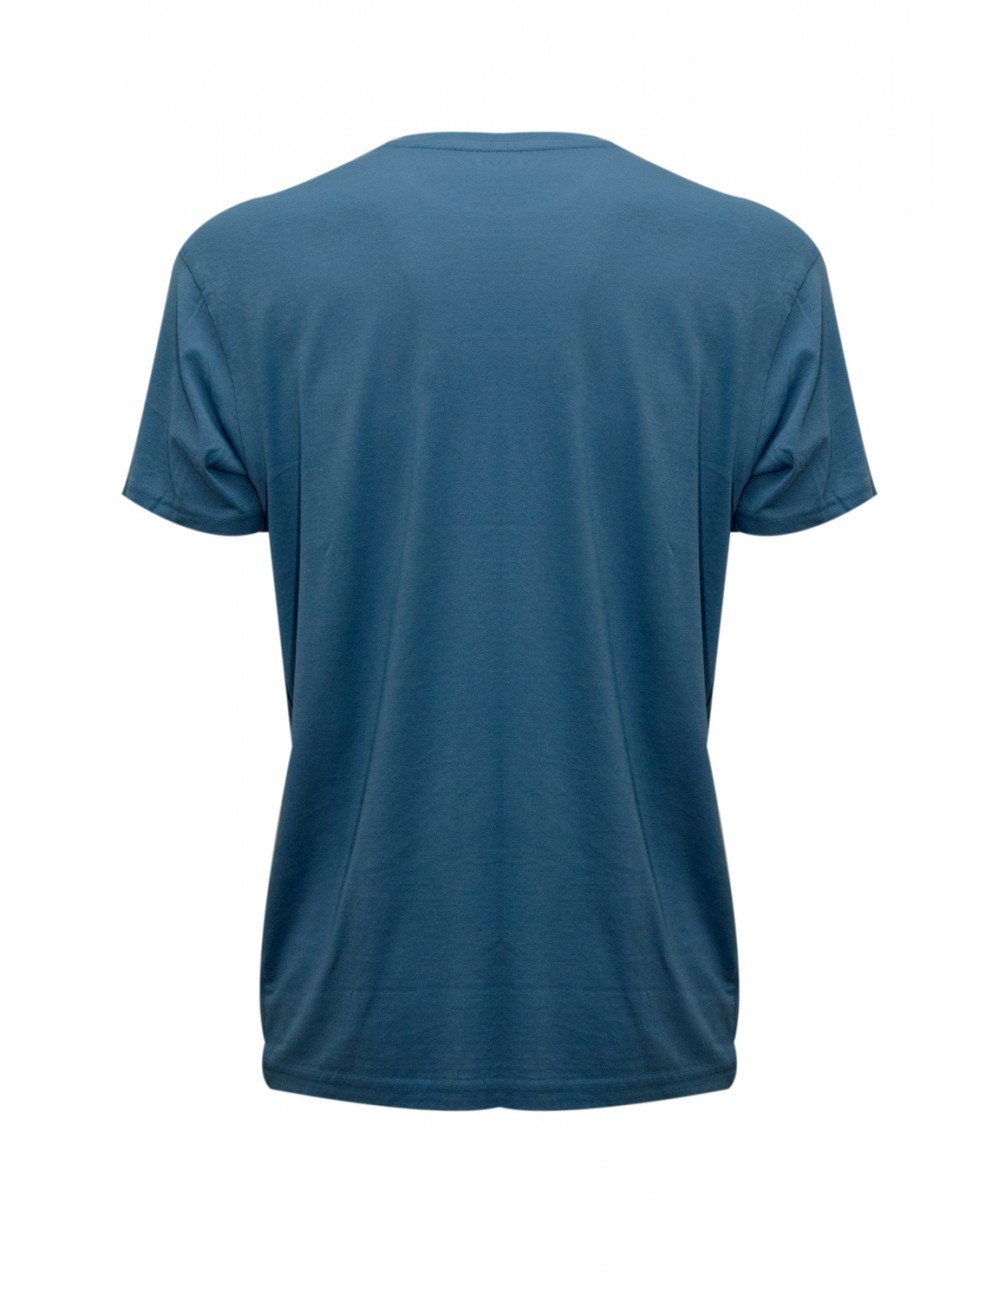 t-shirt censured UOMO BLU AIR BLUE - TM C227 T JSEL 22 vista frontale